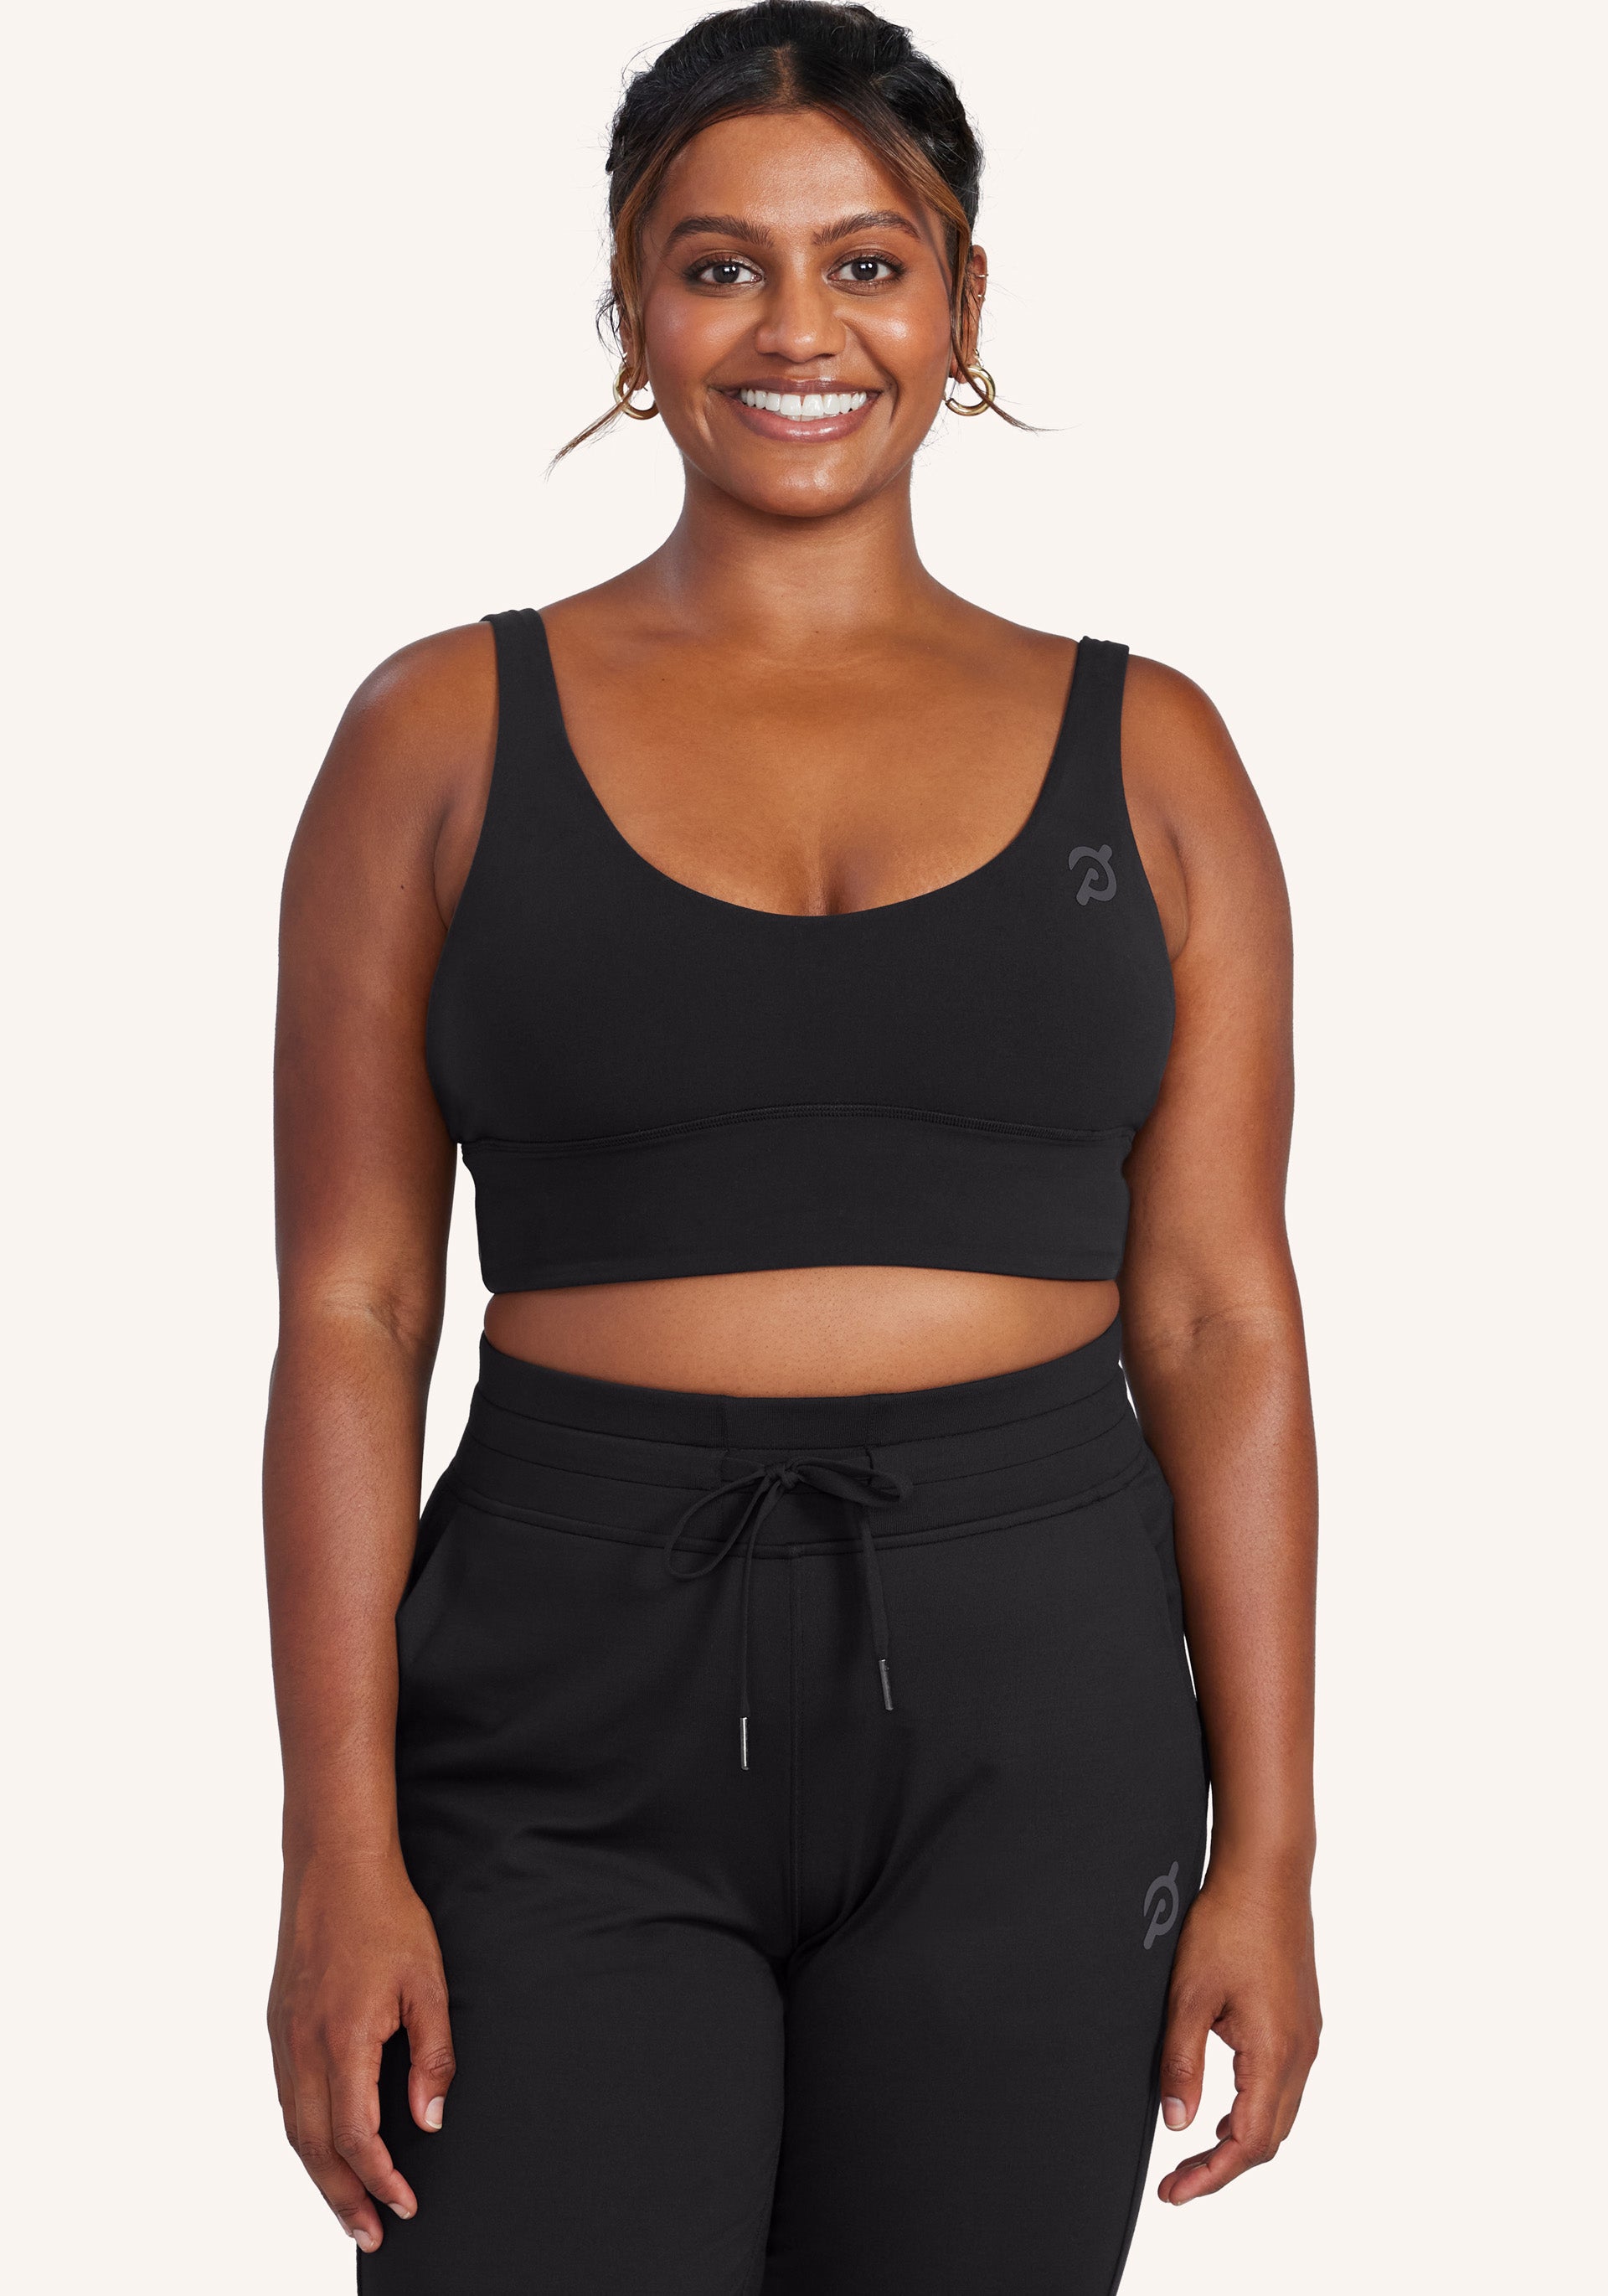 lululemon - Lululemon Black Sports Bra - Size 6 US on Designer Wardrobe